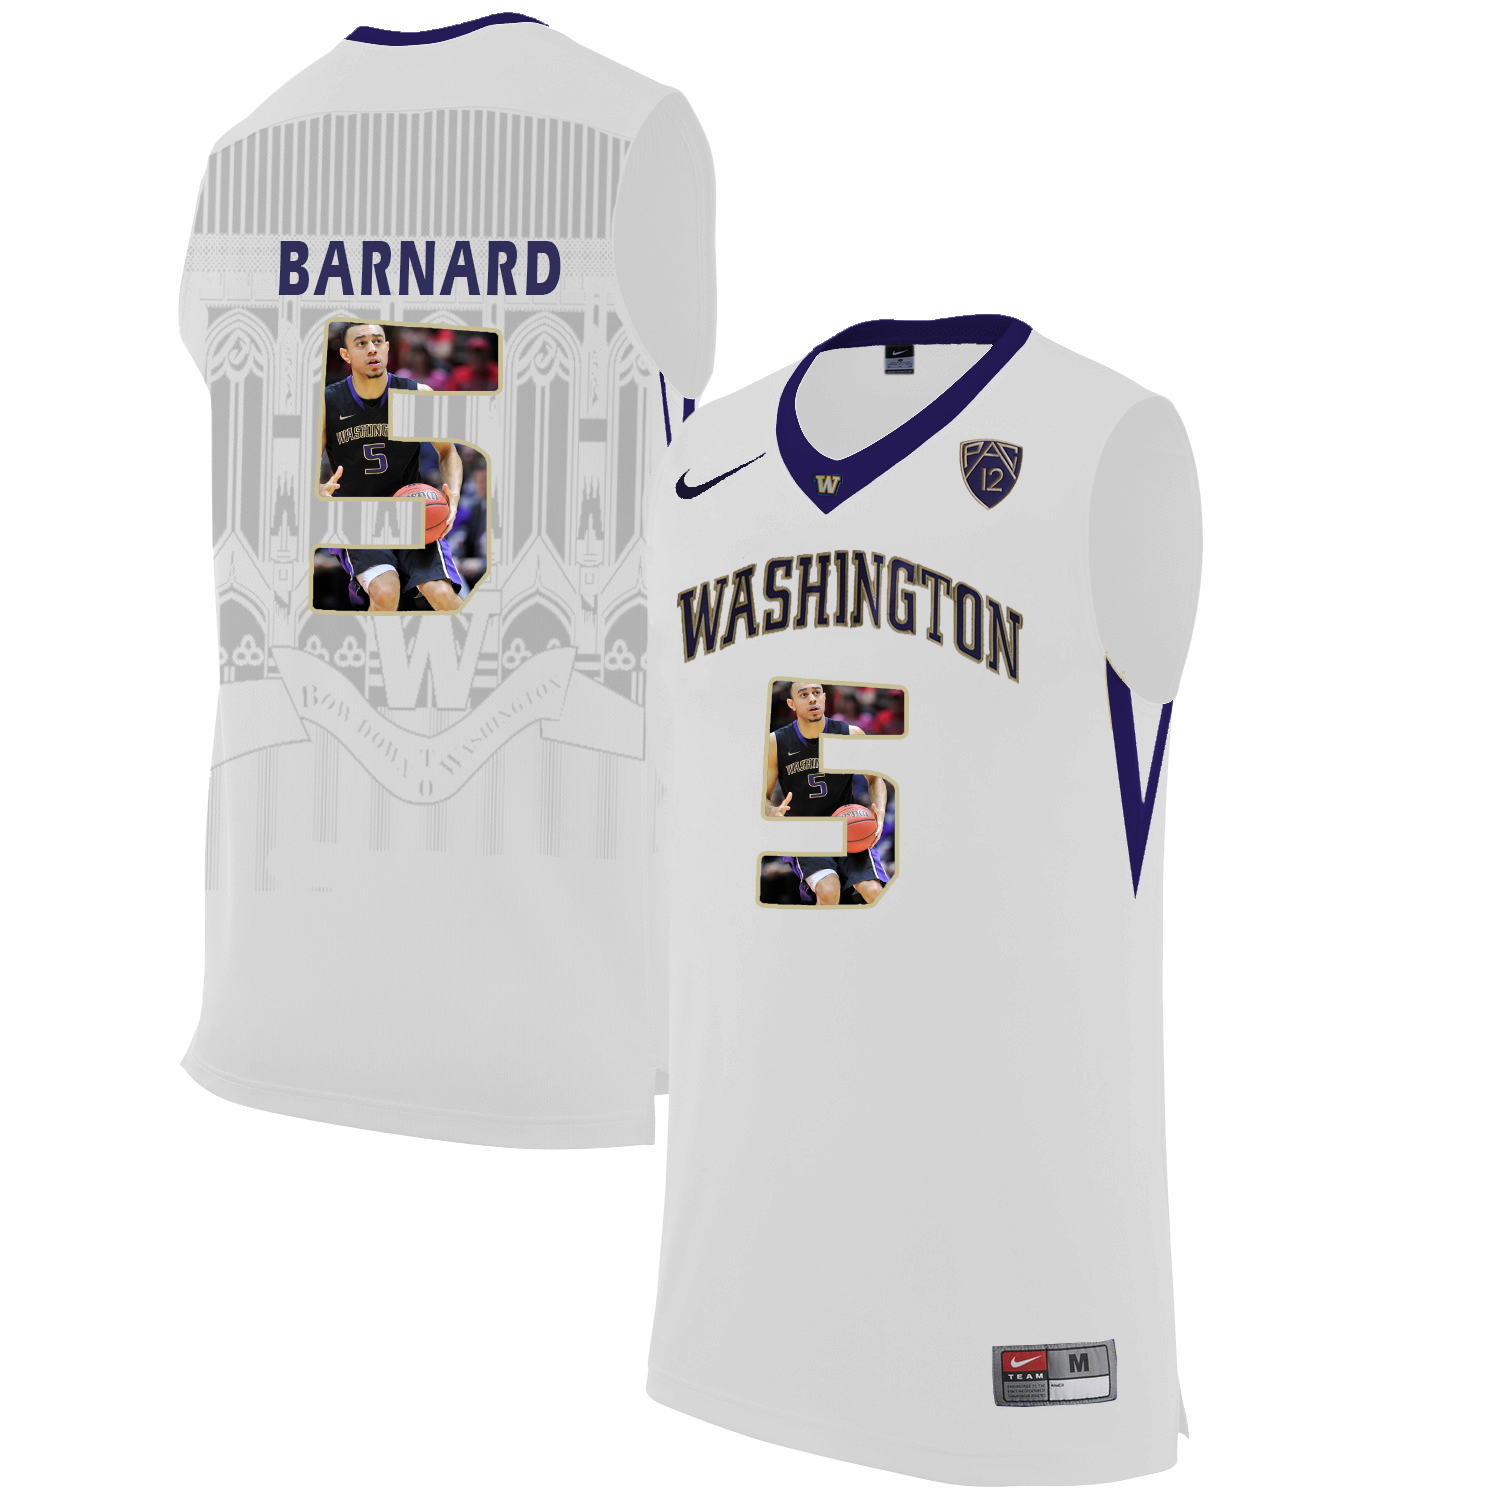 Washington Huskies 5 Quin Barnard White With Portait College Basketball Jersey